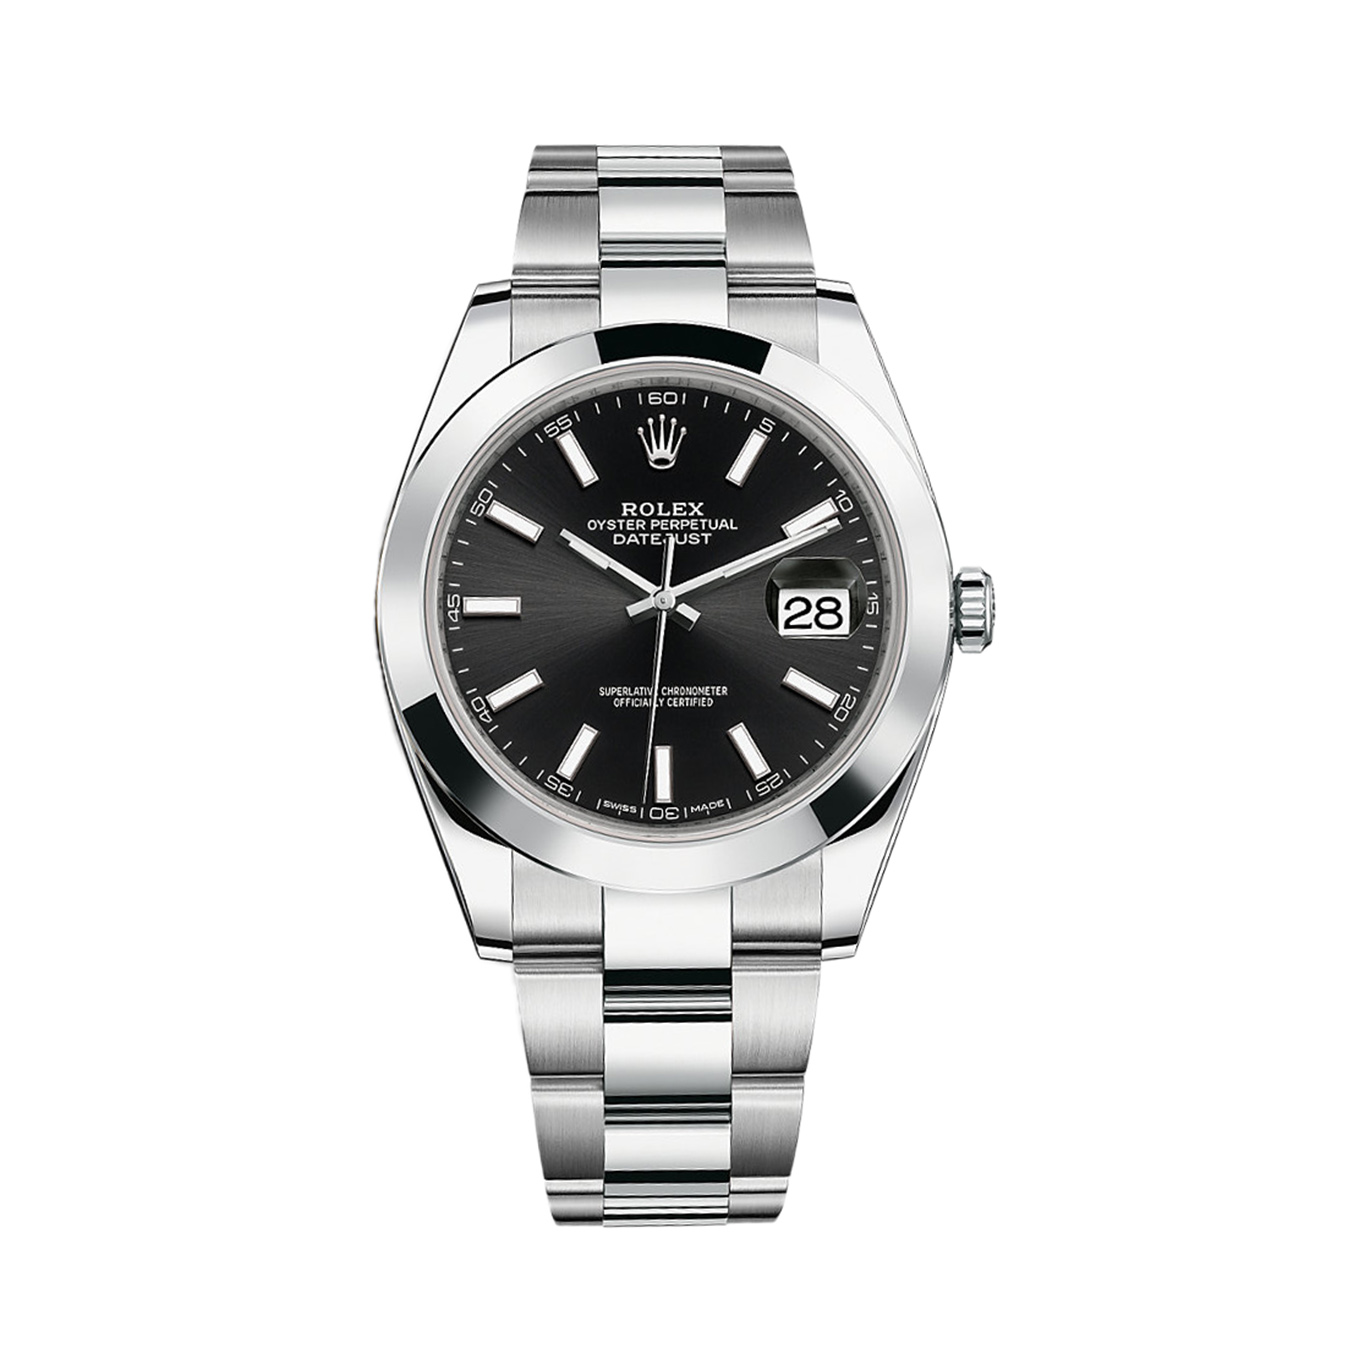 Datejust 41 126300 Stainless Steel Watch (Black)